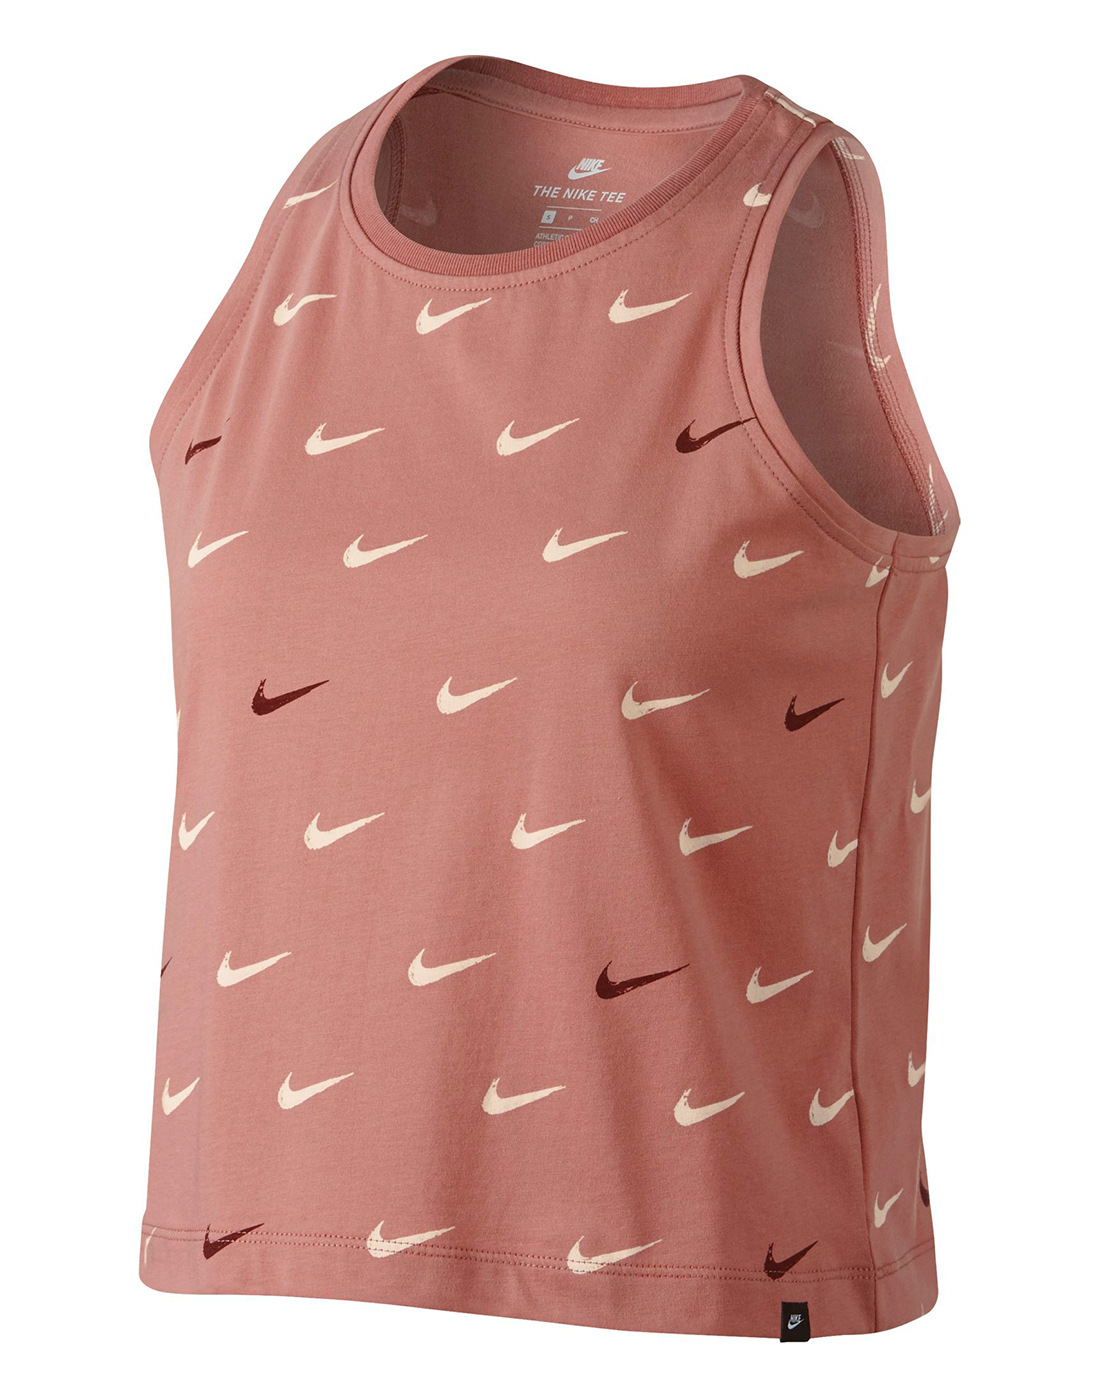 Women's Pink Nike Swoosh Crop Tank Top 